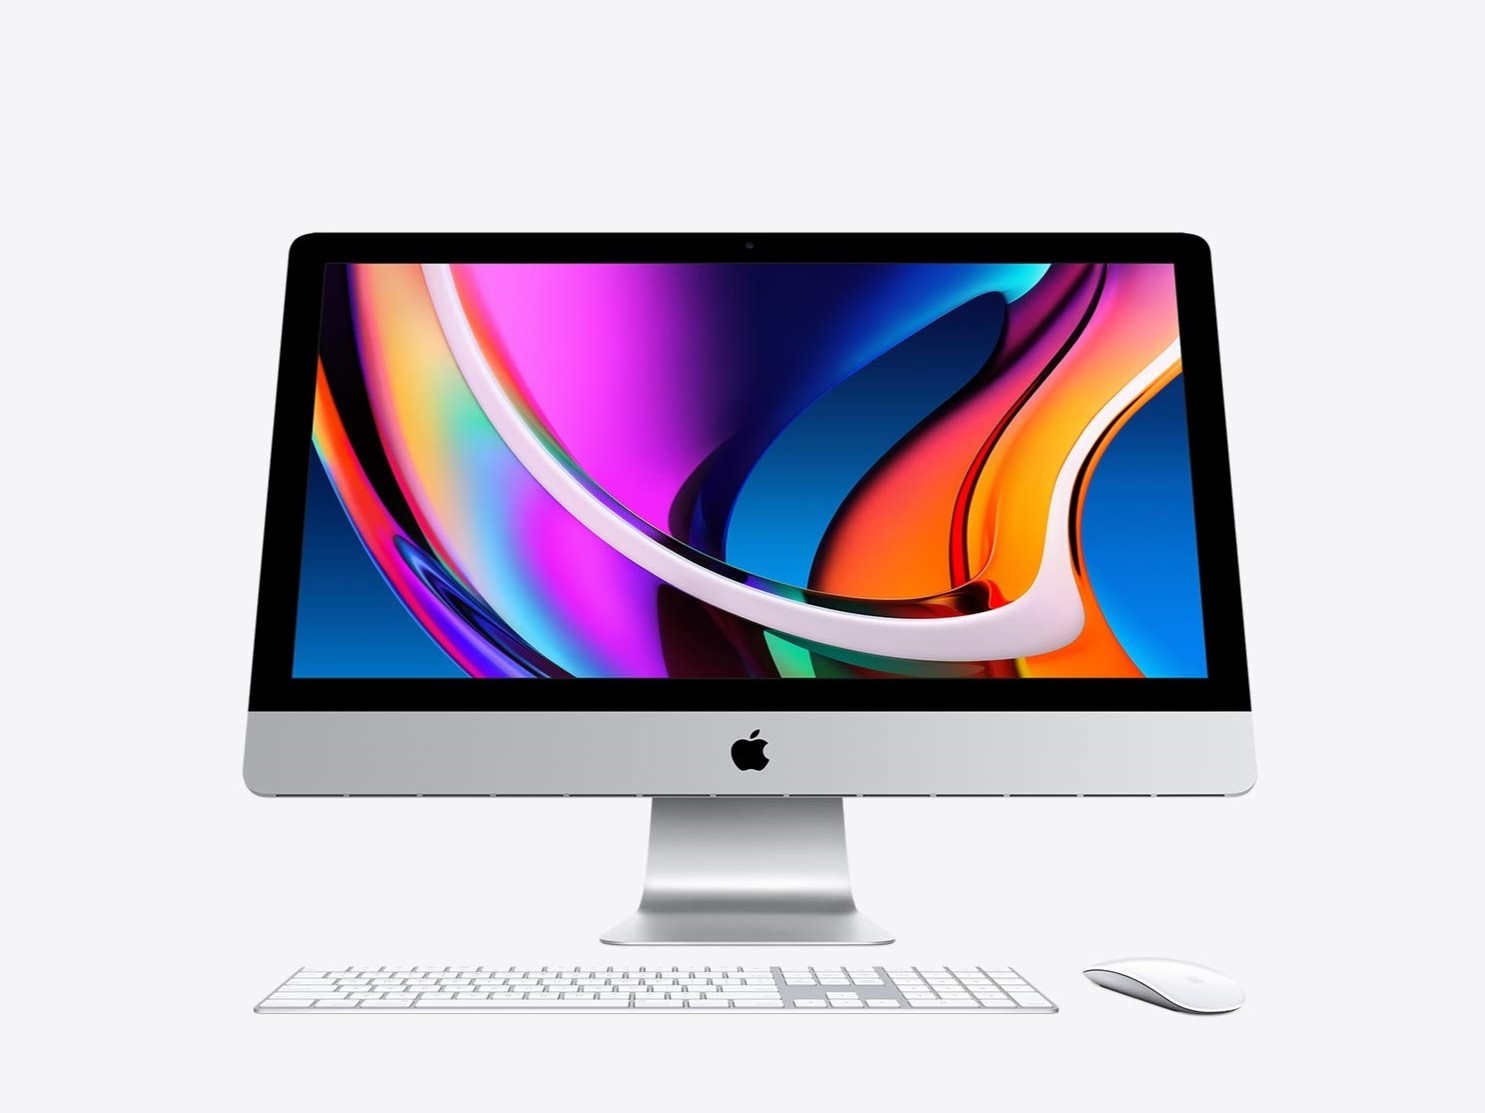 iMac 27 英寸 5K Retina 显示屏，带有键盘和鼠标产品图像。